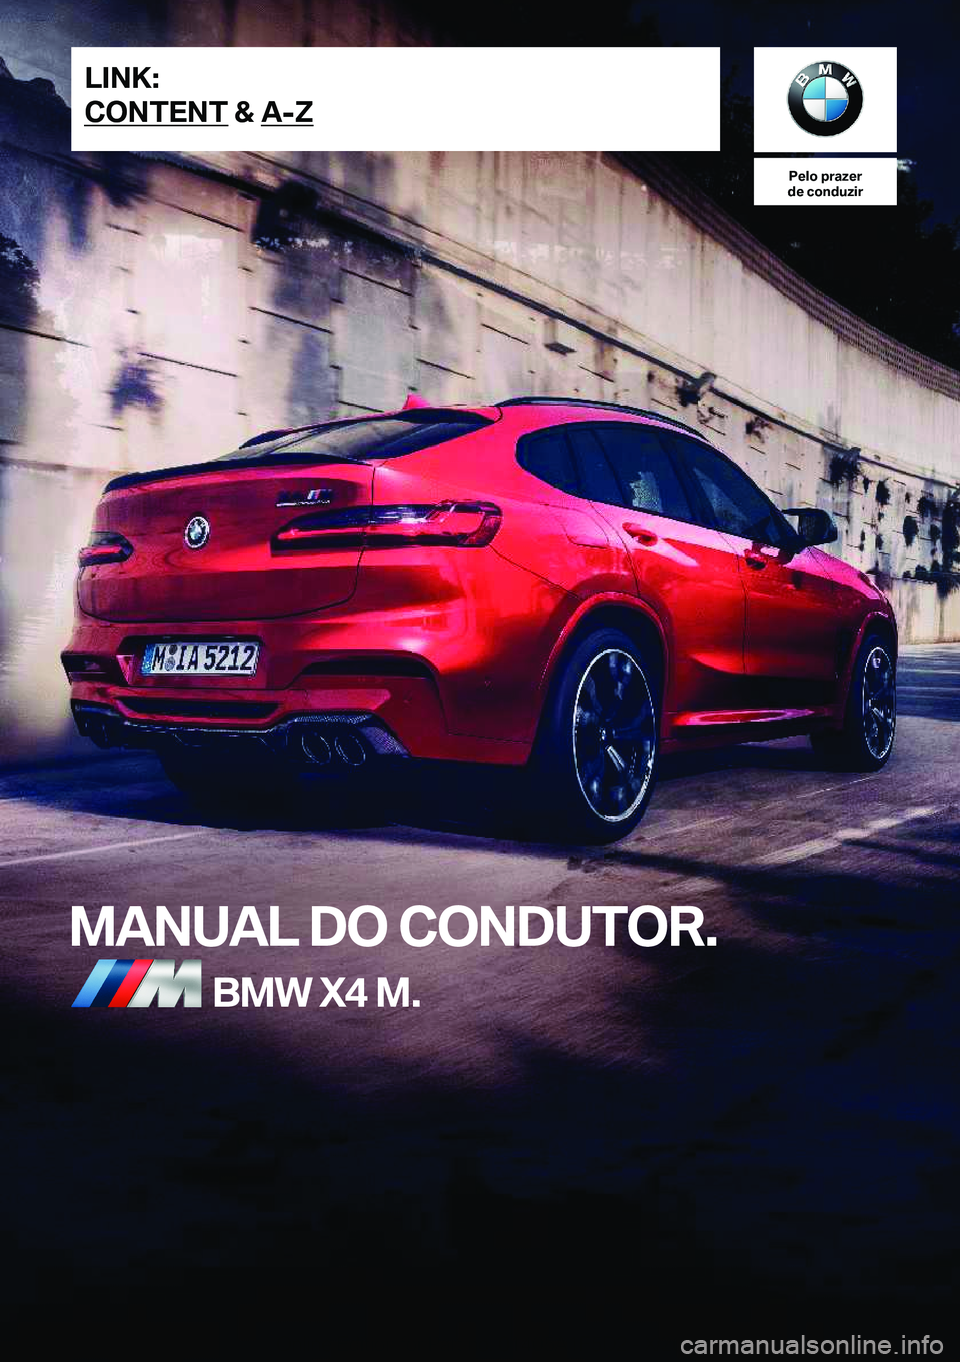 BMW X4 M 2021  Manual do condutor (in Portuguese) �P�e�l�o��p�r�a�z�e�r
�d�e��c�o�n�d�u�z�i�r
�M�A�N�U�A�L��D�O��C�O�N�D�U�T�O�R�.�B�M�W��X�4��M�.�L�I�N�K�:
�C�O�N�T�E�N�T��&��A�-�Z�O�n�l�i�n�e��E�d�i�t�i�o�n��f�o�r��P�a�r�t��n�o�.��0�1�